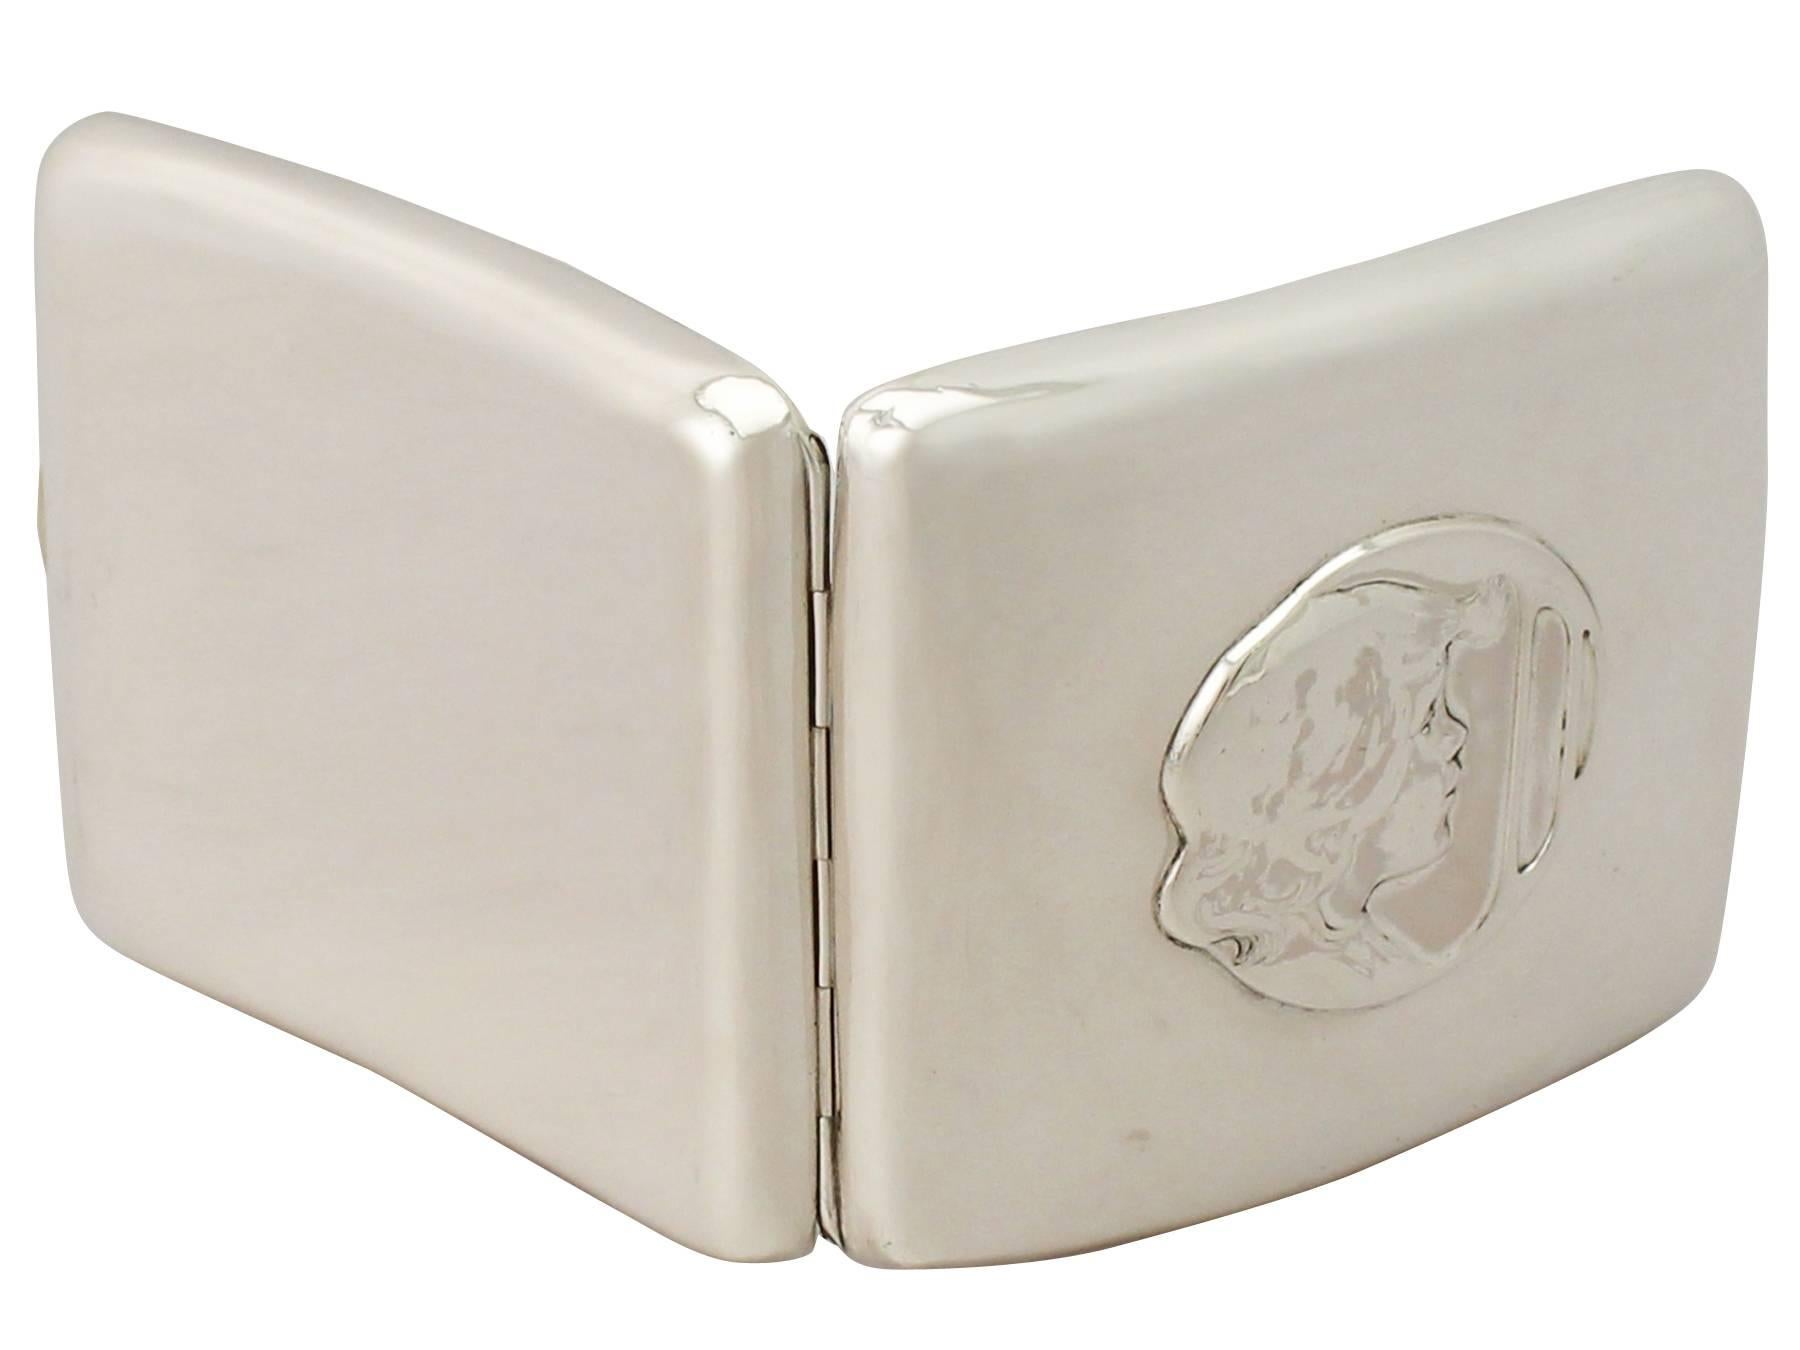 Early 20th Century Sterling Silver Cigarette Case, Art Nouveau Style, Antique Edwardian